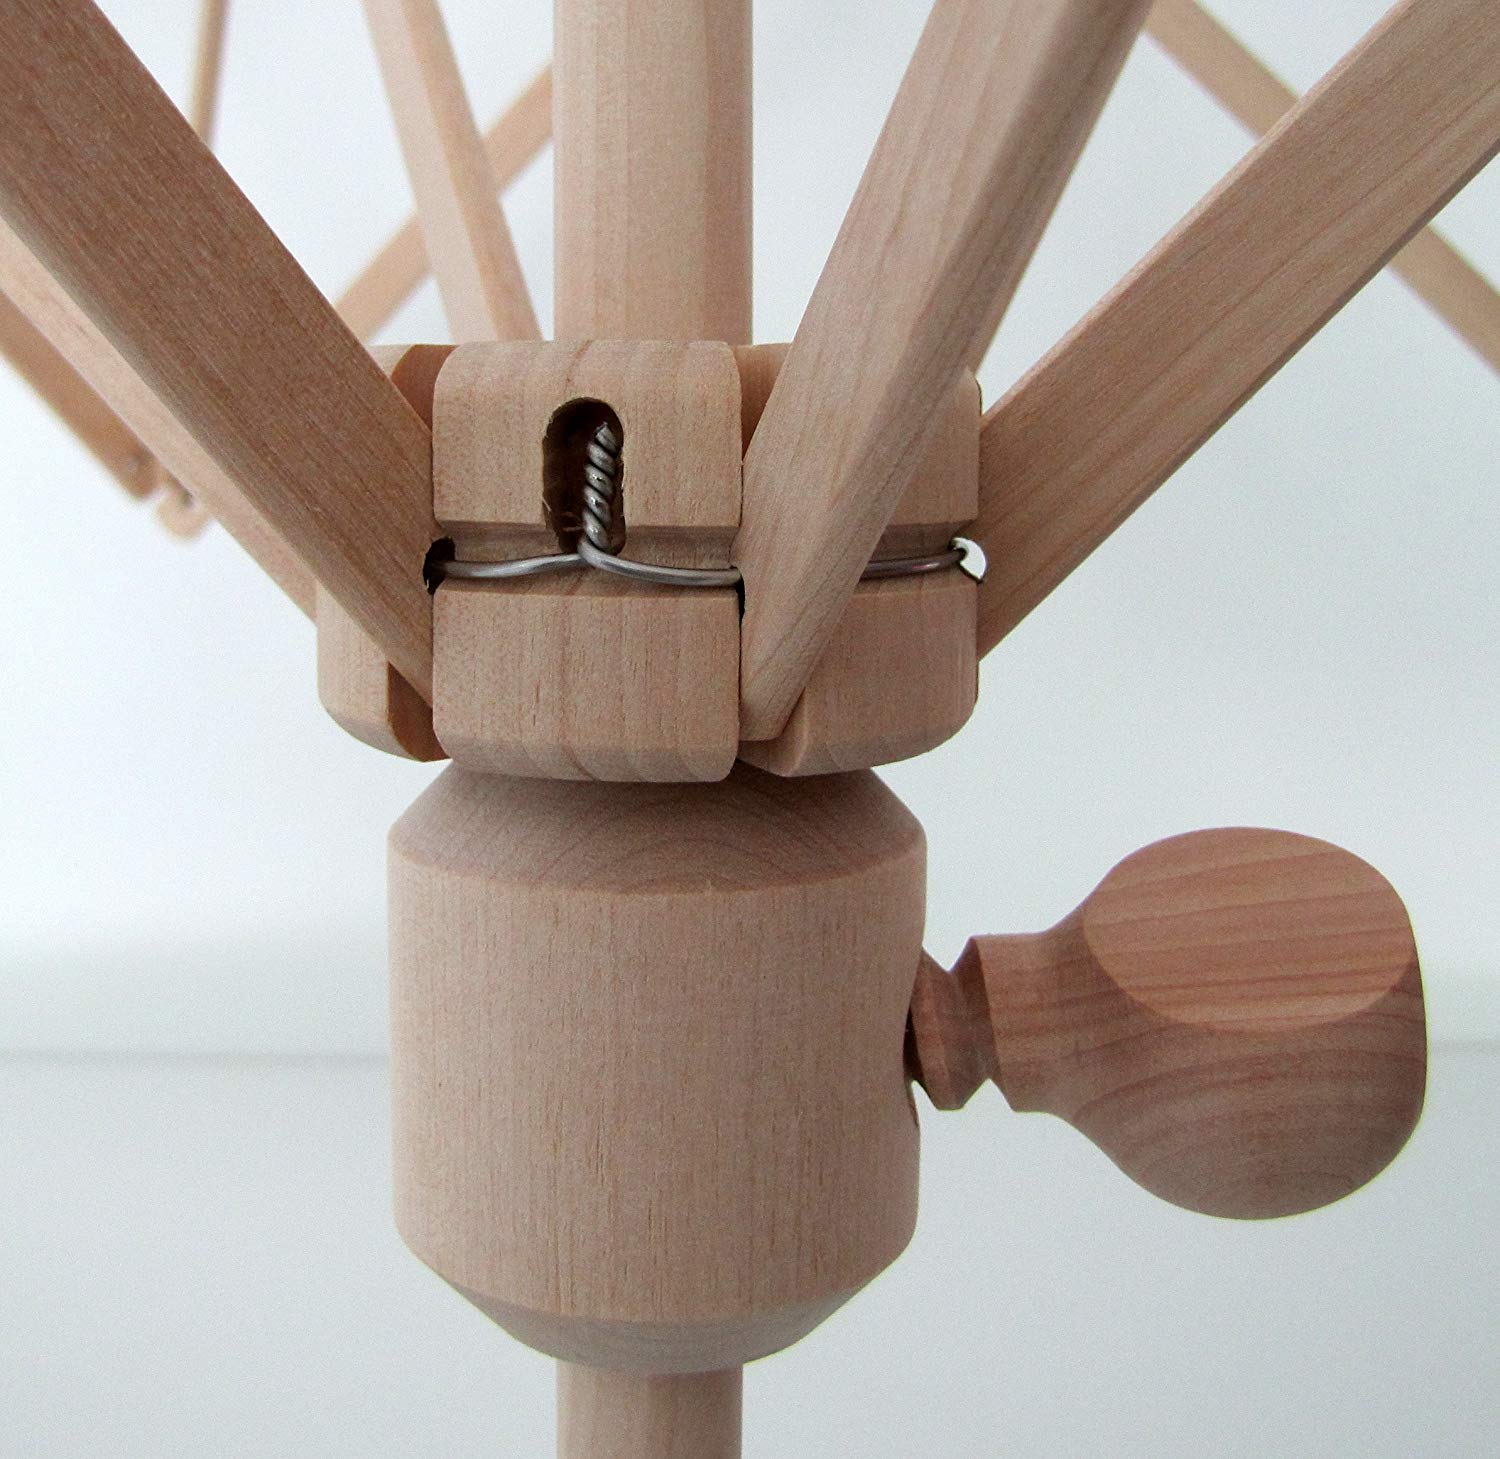 Stanwood Needlecraft: Wooden Umbrella Swift Yarn Winder - Large, 8.5 f –  stanwoodbrands